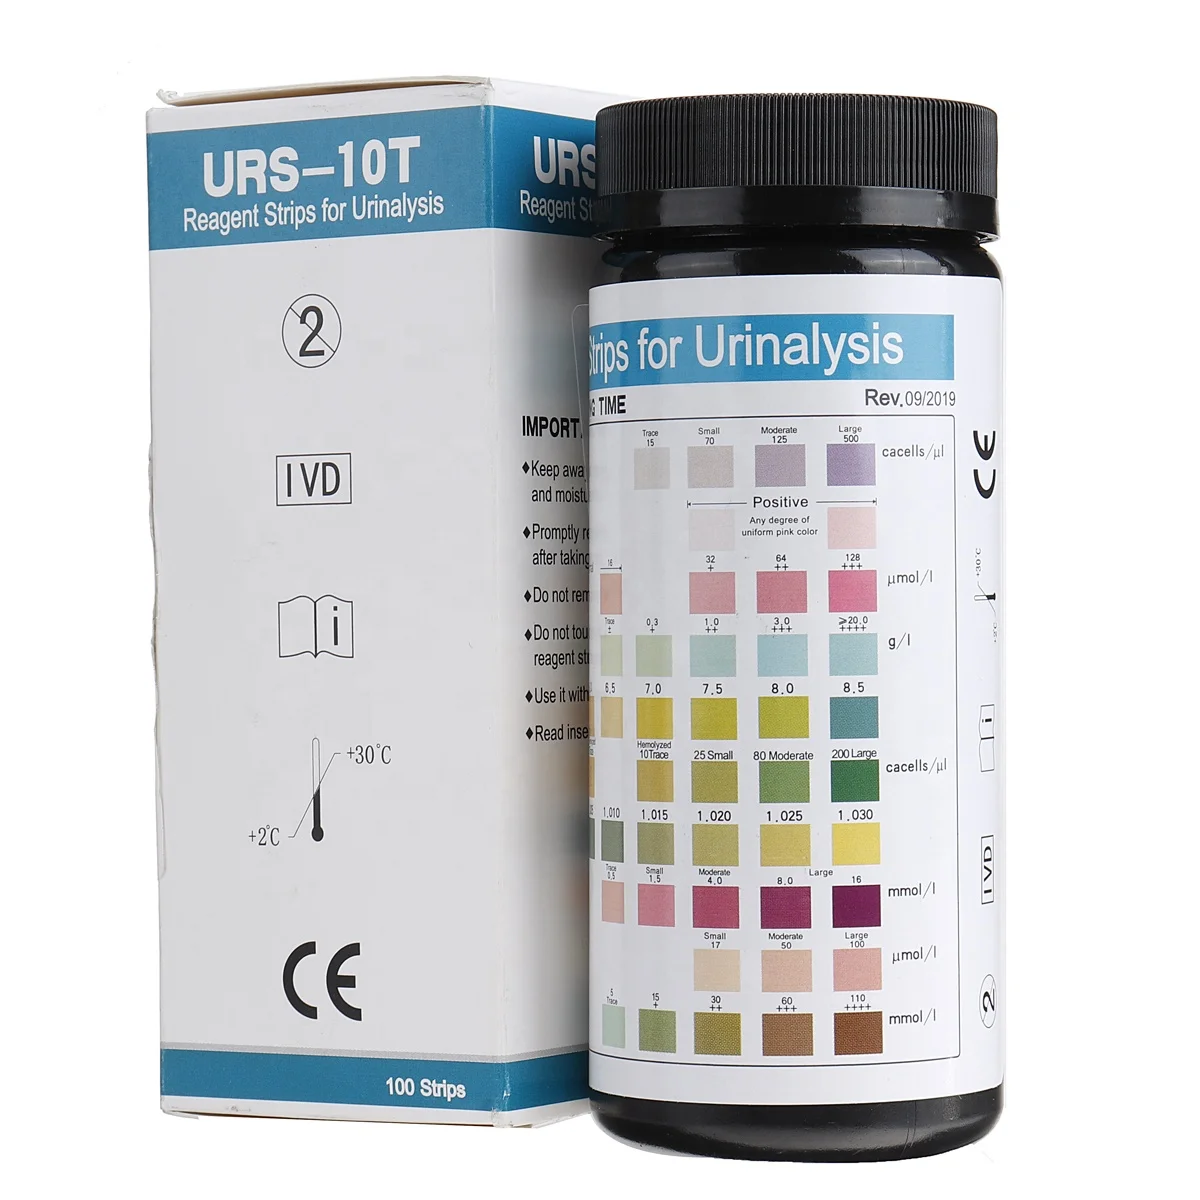 Wholesale 10パラメータグルコースph urinalysis試薬ストリップカスタム卸売尿テストストリップURS-10T From 